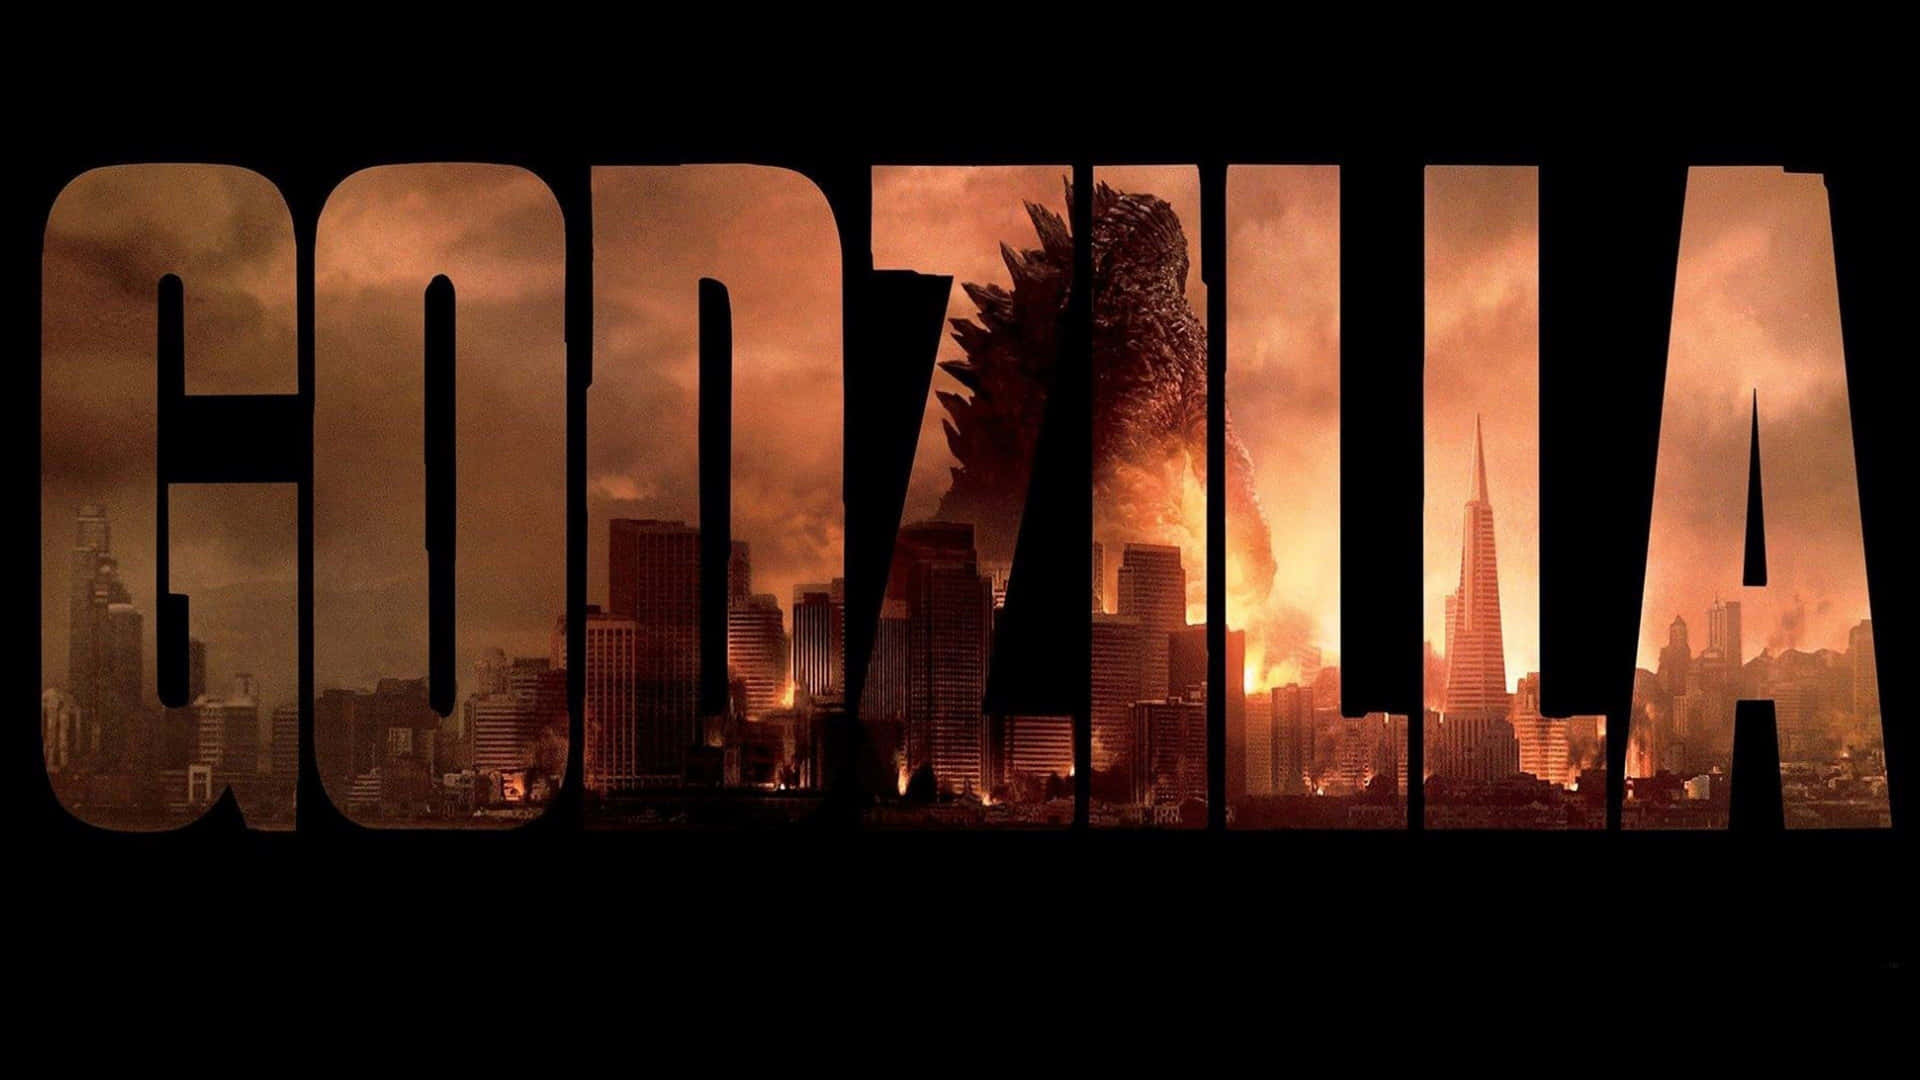 Cool Godzilla Movie Poster Wallpaper